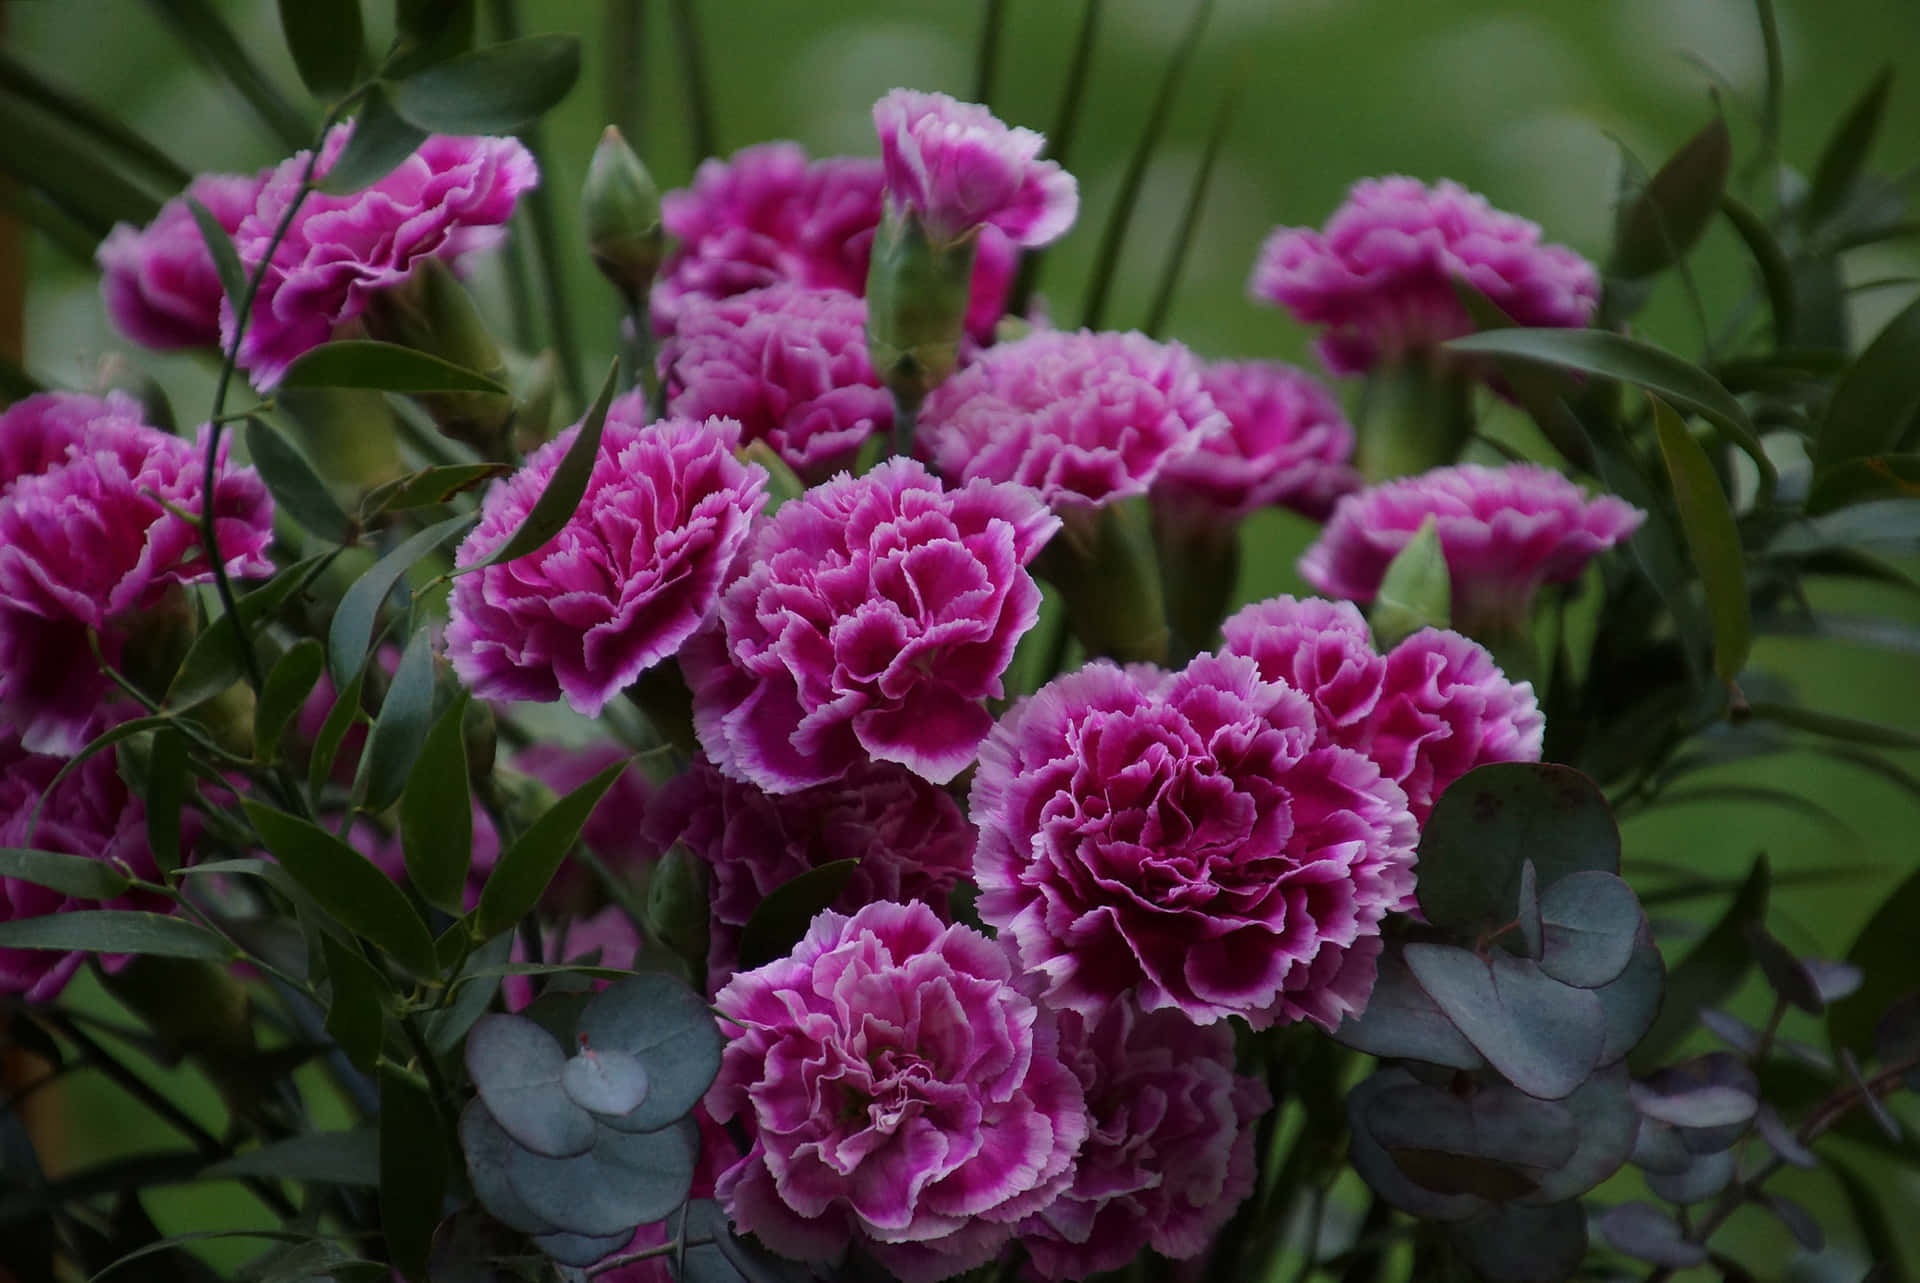 carnations - a bouquet of purple flowers